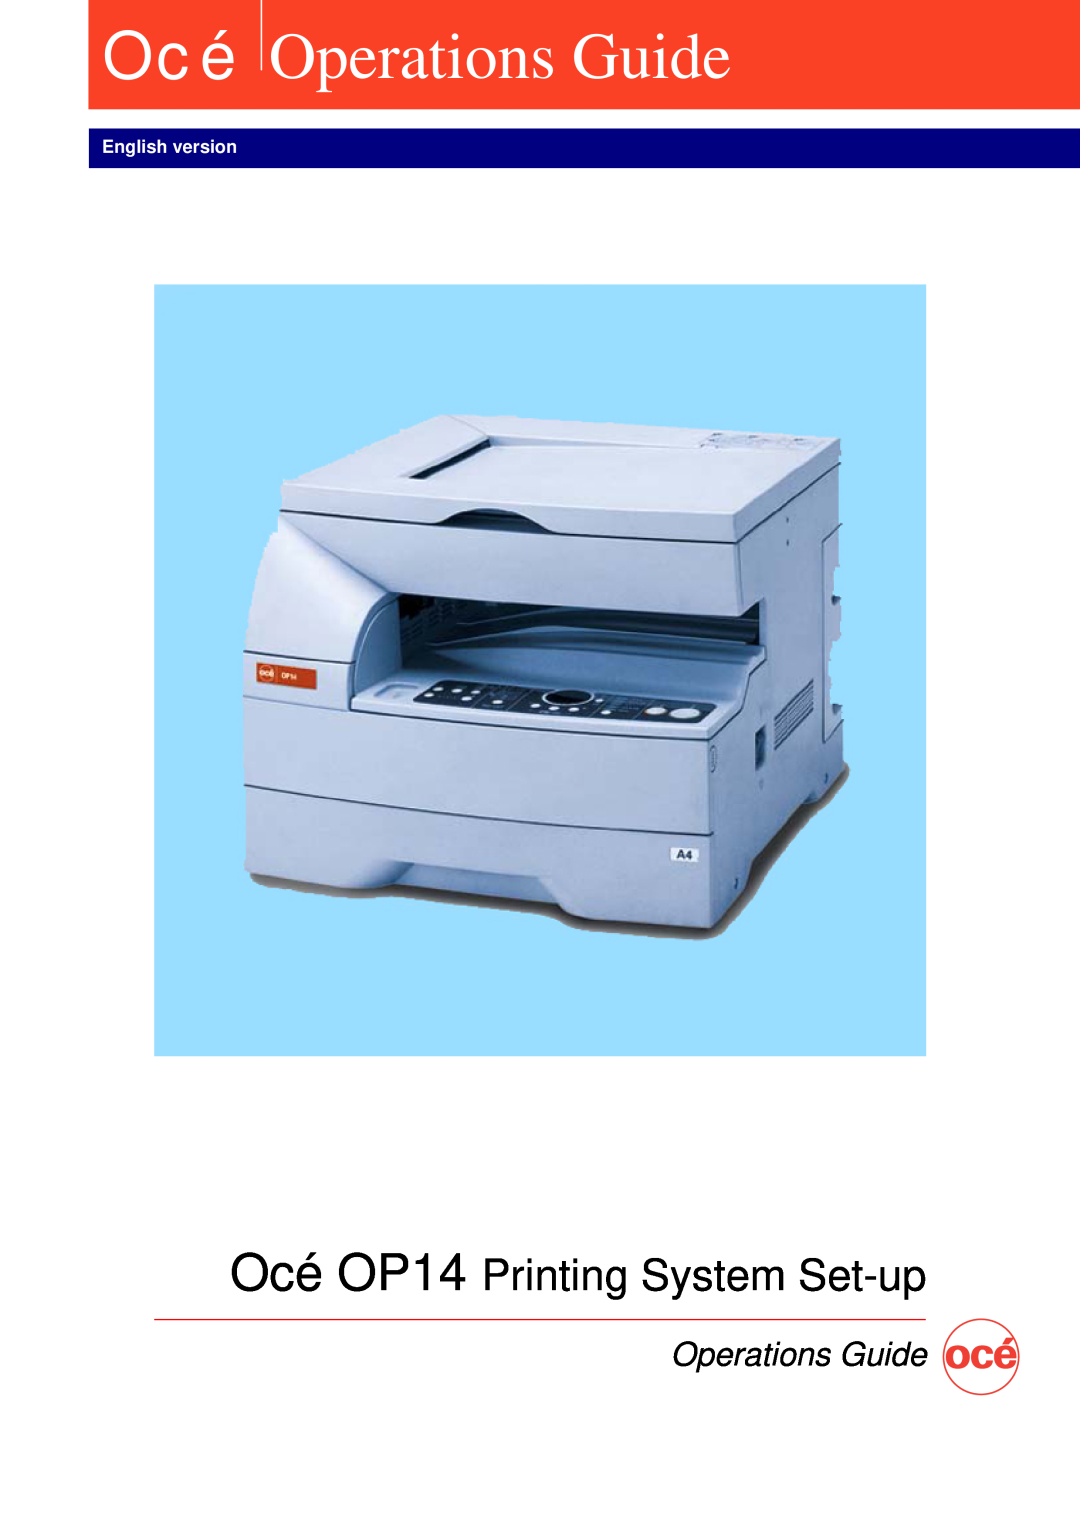 Oce North America manual Océ Operations Guide, Océ OP14 Printing System Set-up, English version 